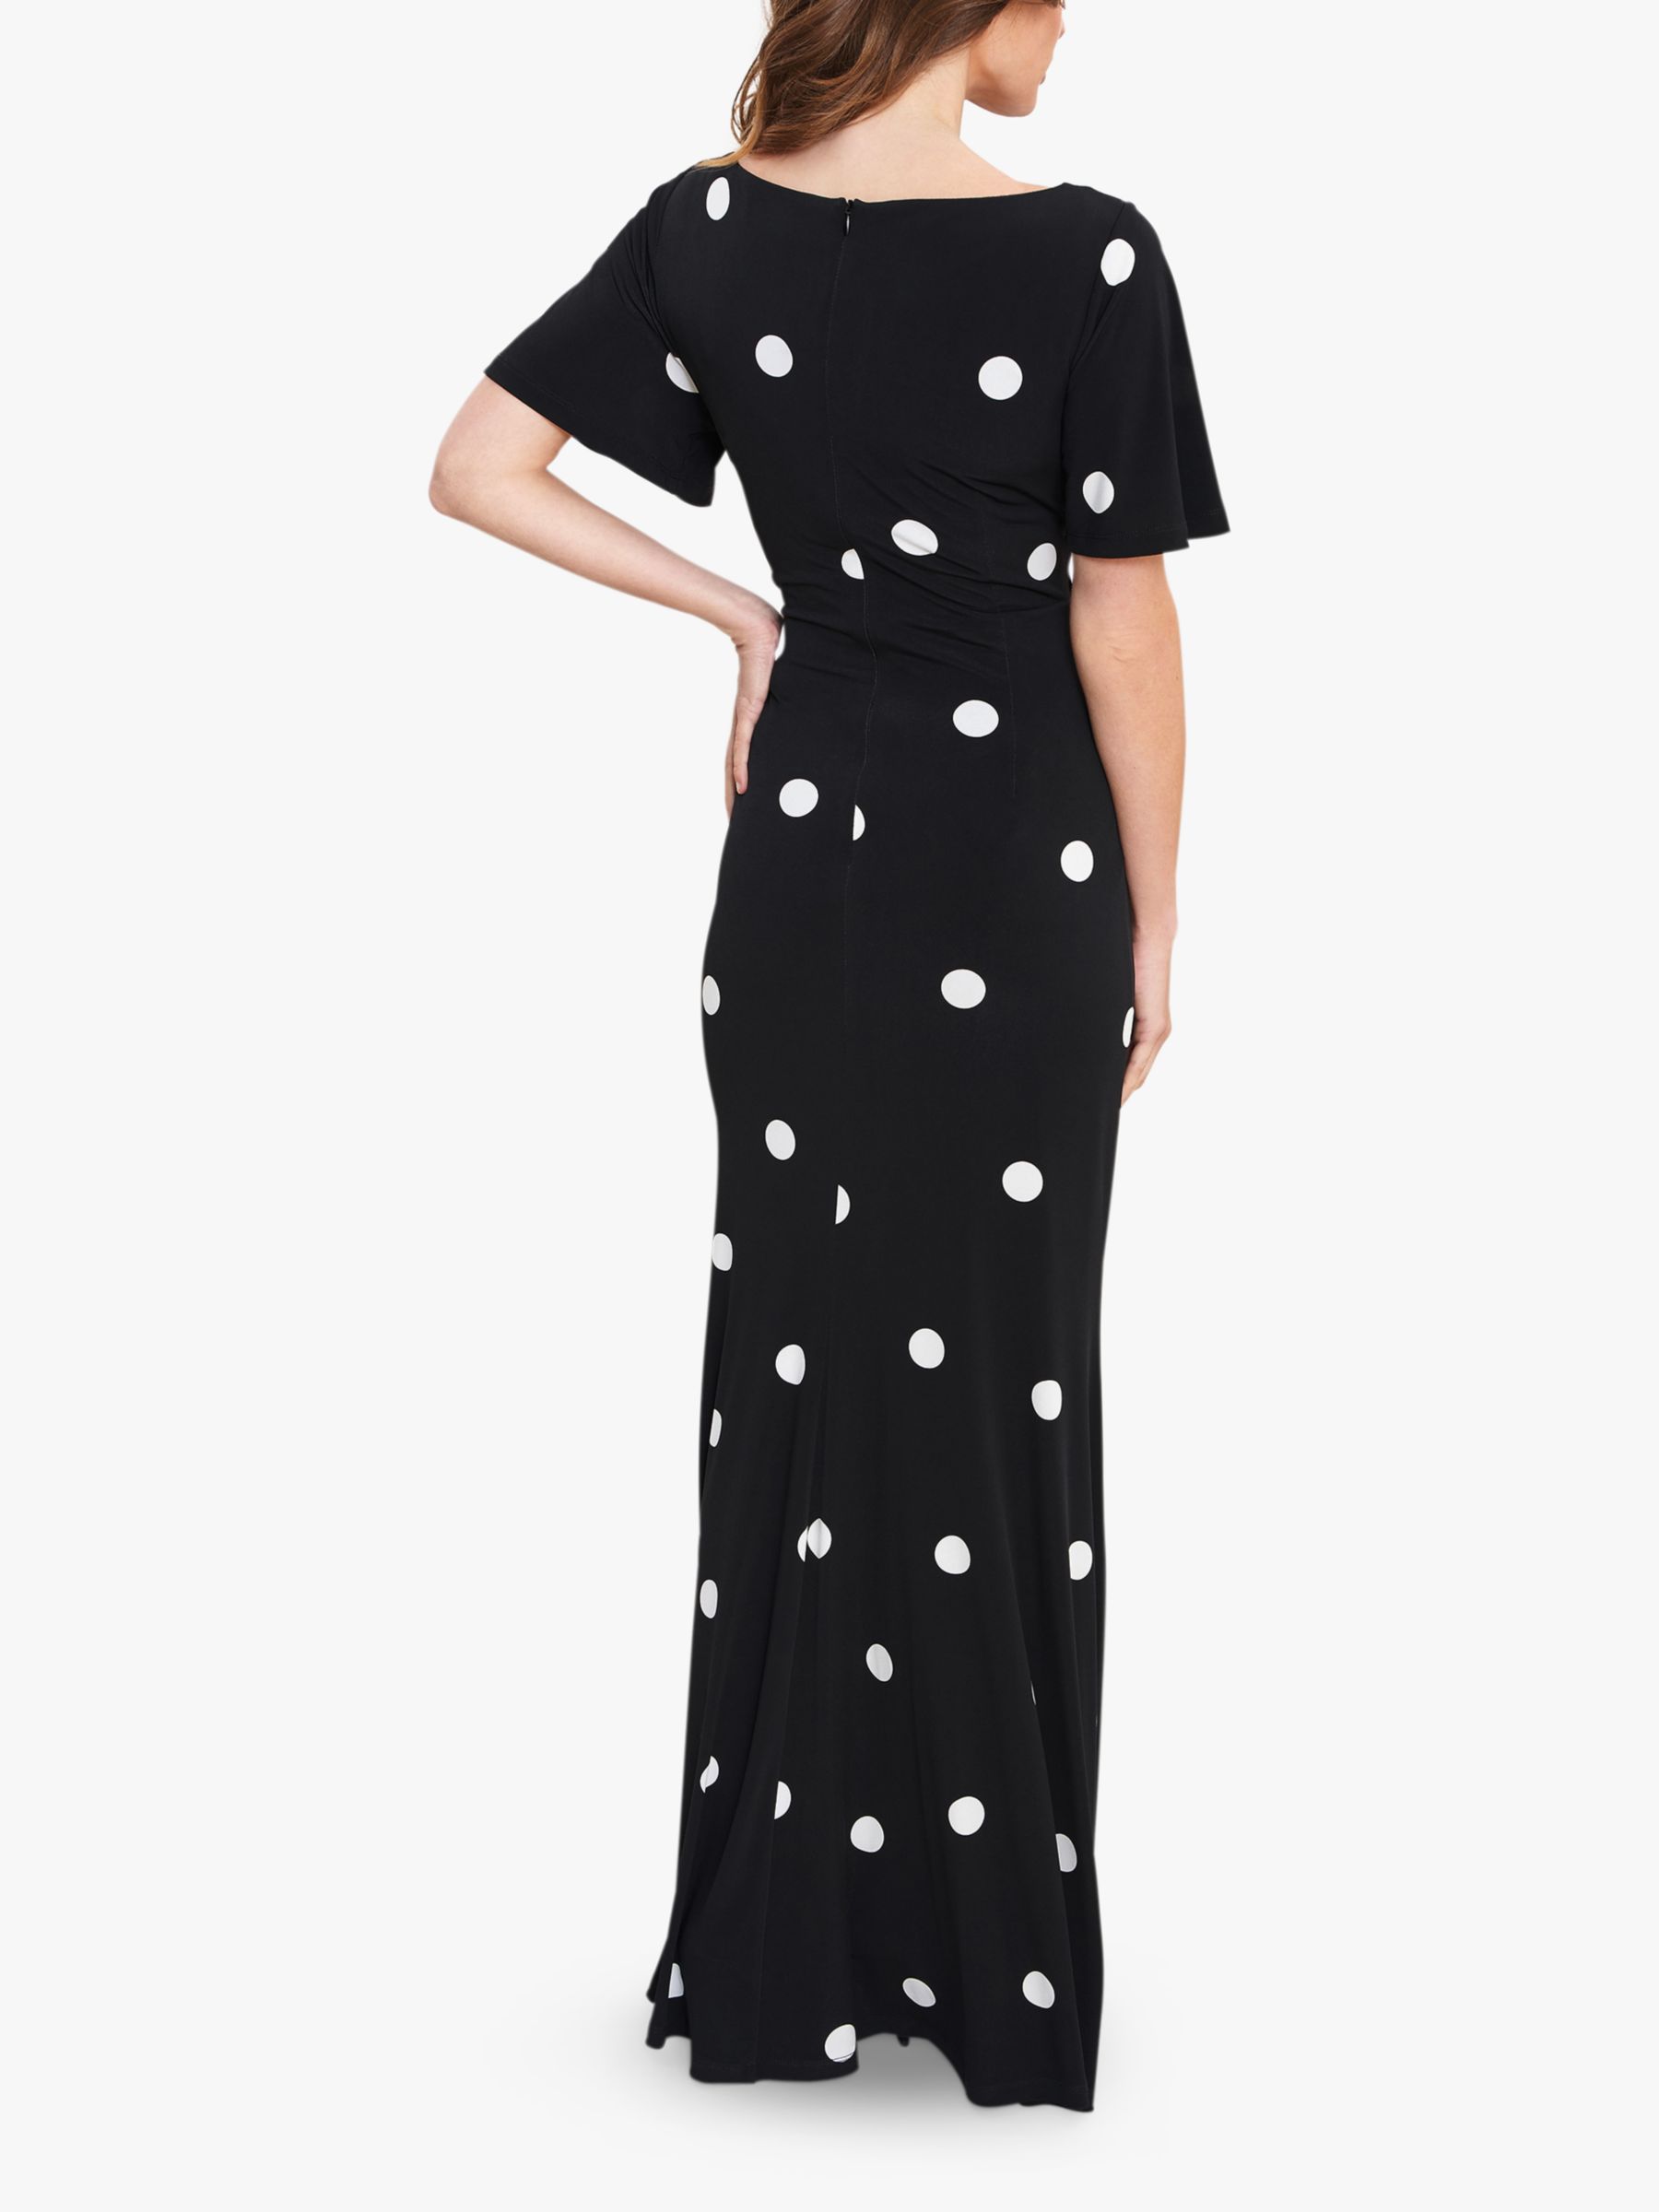 Gina Bacconi Aleece Spaced Spot Jersey Maxi Dress, Black/White, 8